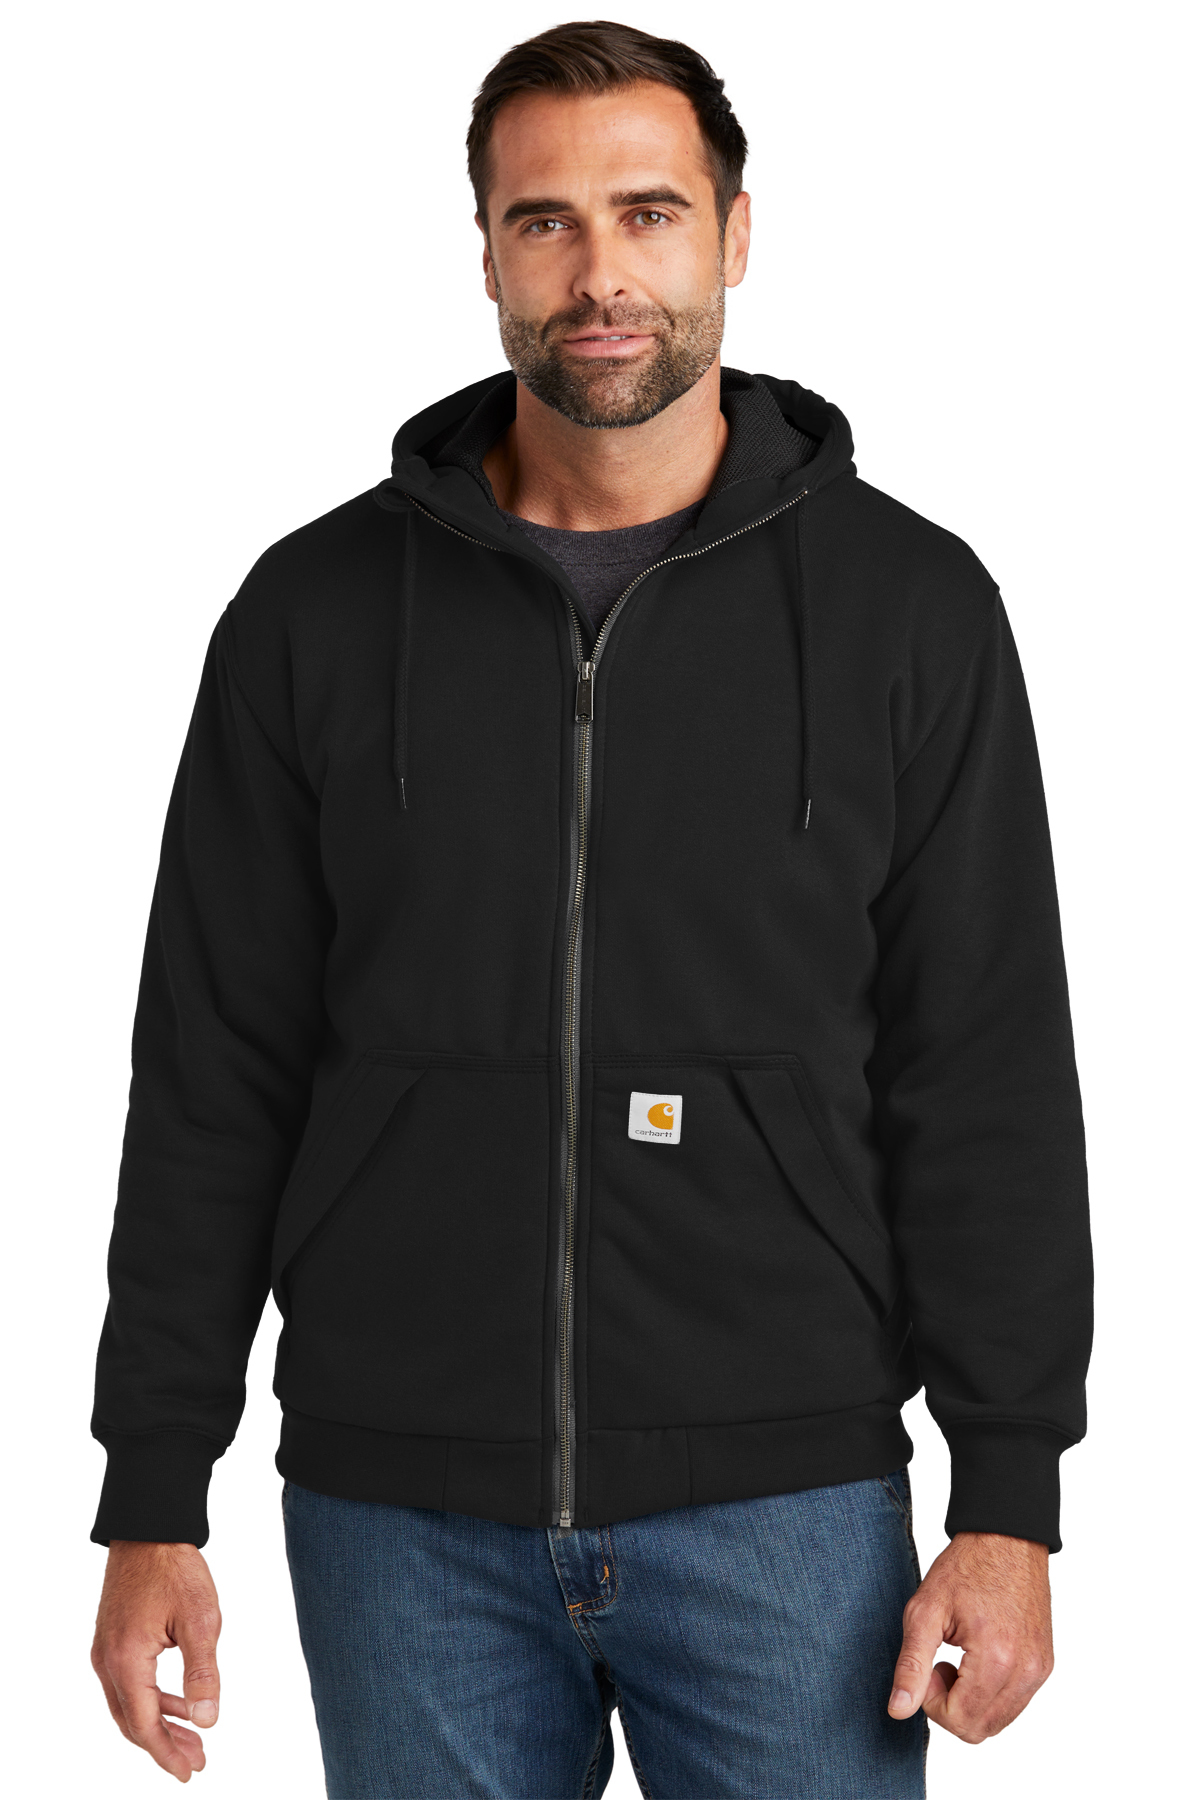 Carhartt® Midweight Thermal-Lined Full-Zip Sweatshirt